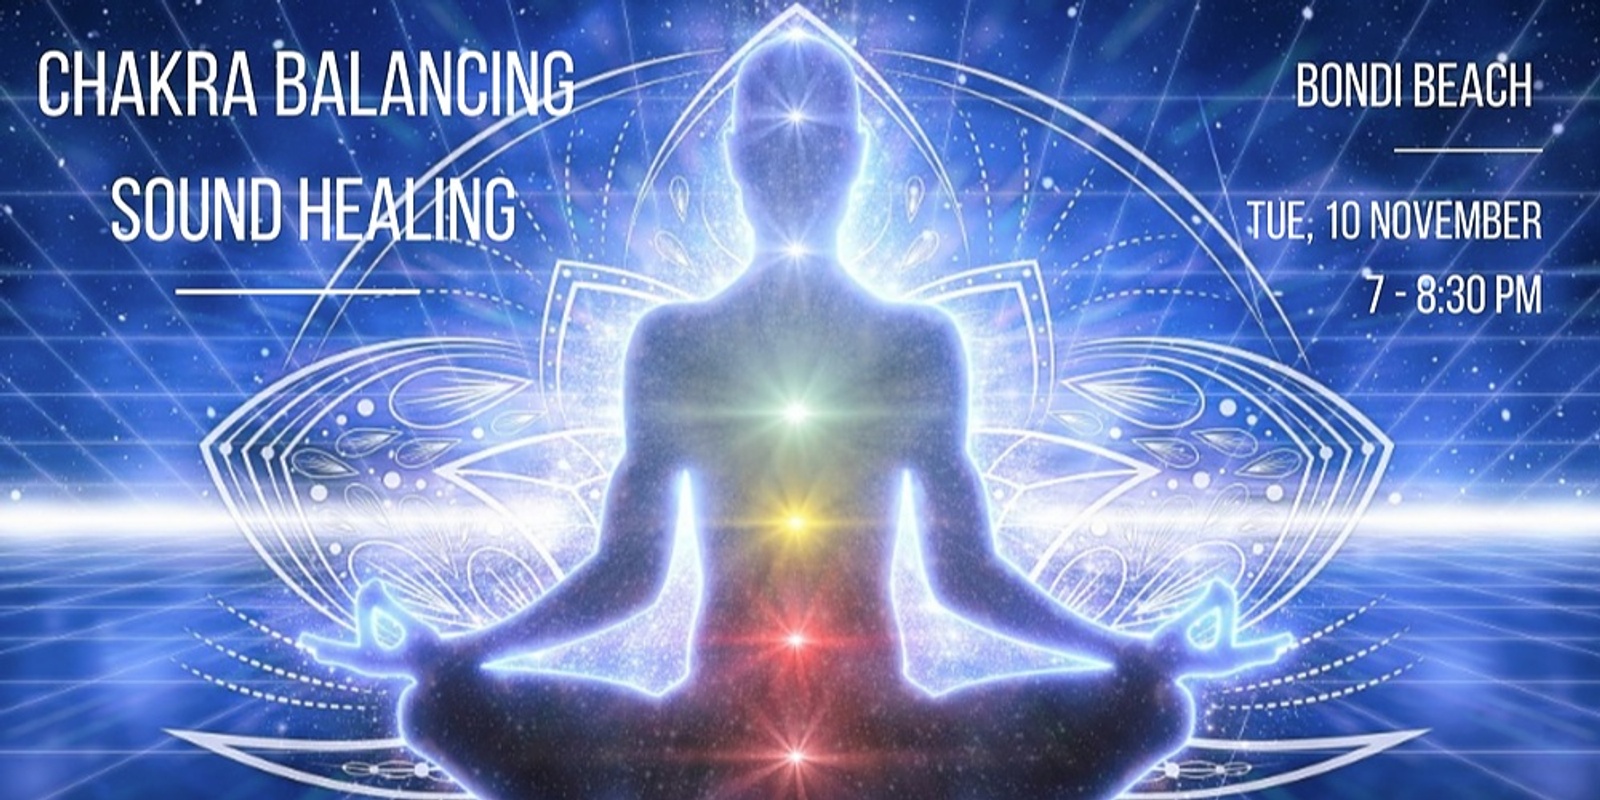 Banner image for Chakra Balancing Sound Healing - Bondi Beach, 10.11.2020